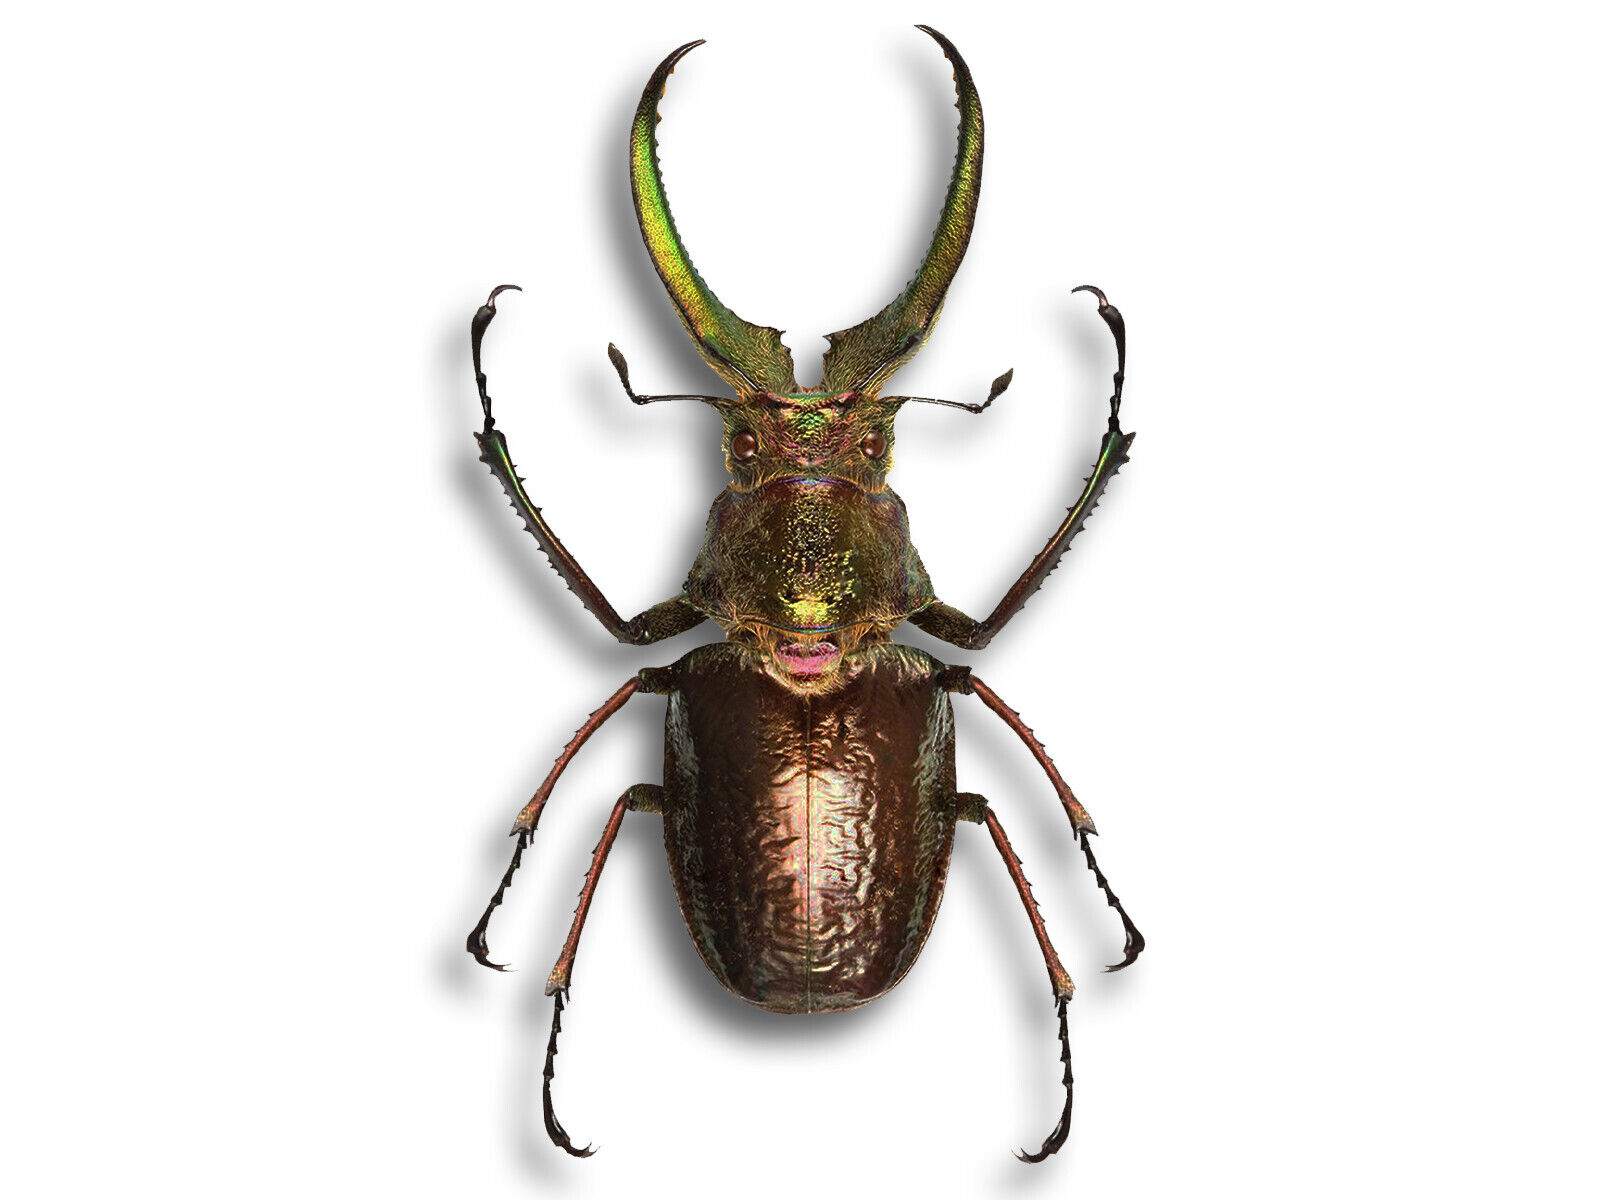 REAL Sphaenognathus giganteus +70mm MALE Stag Beetle 4 Eyes Unmounted USA